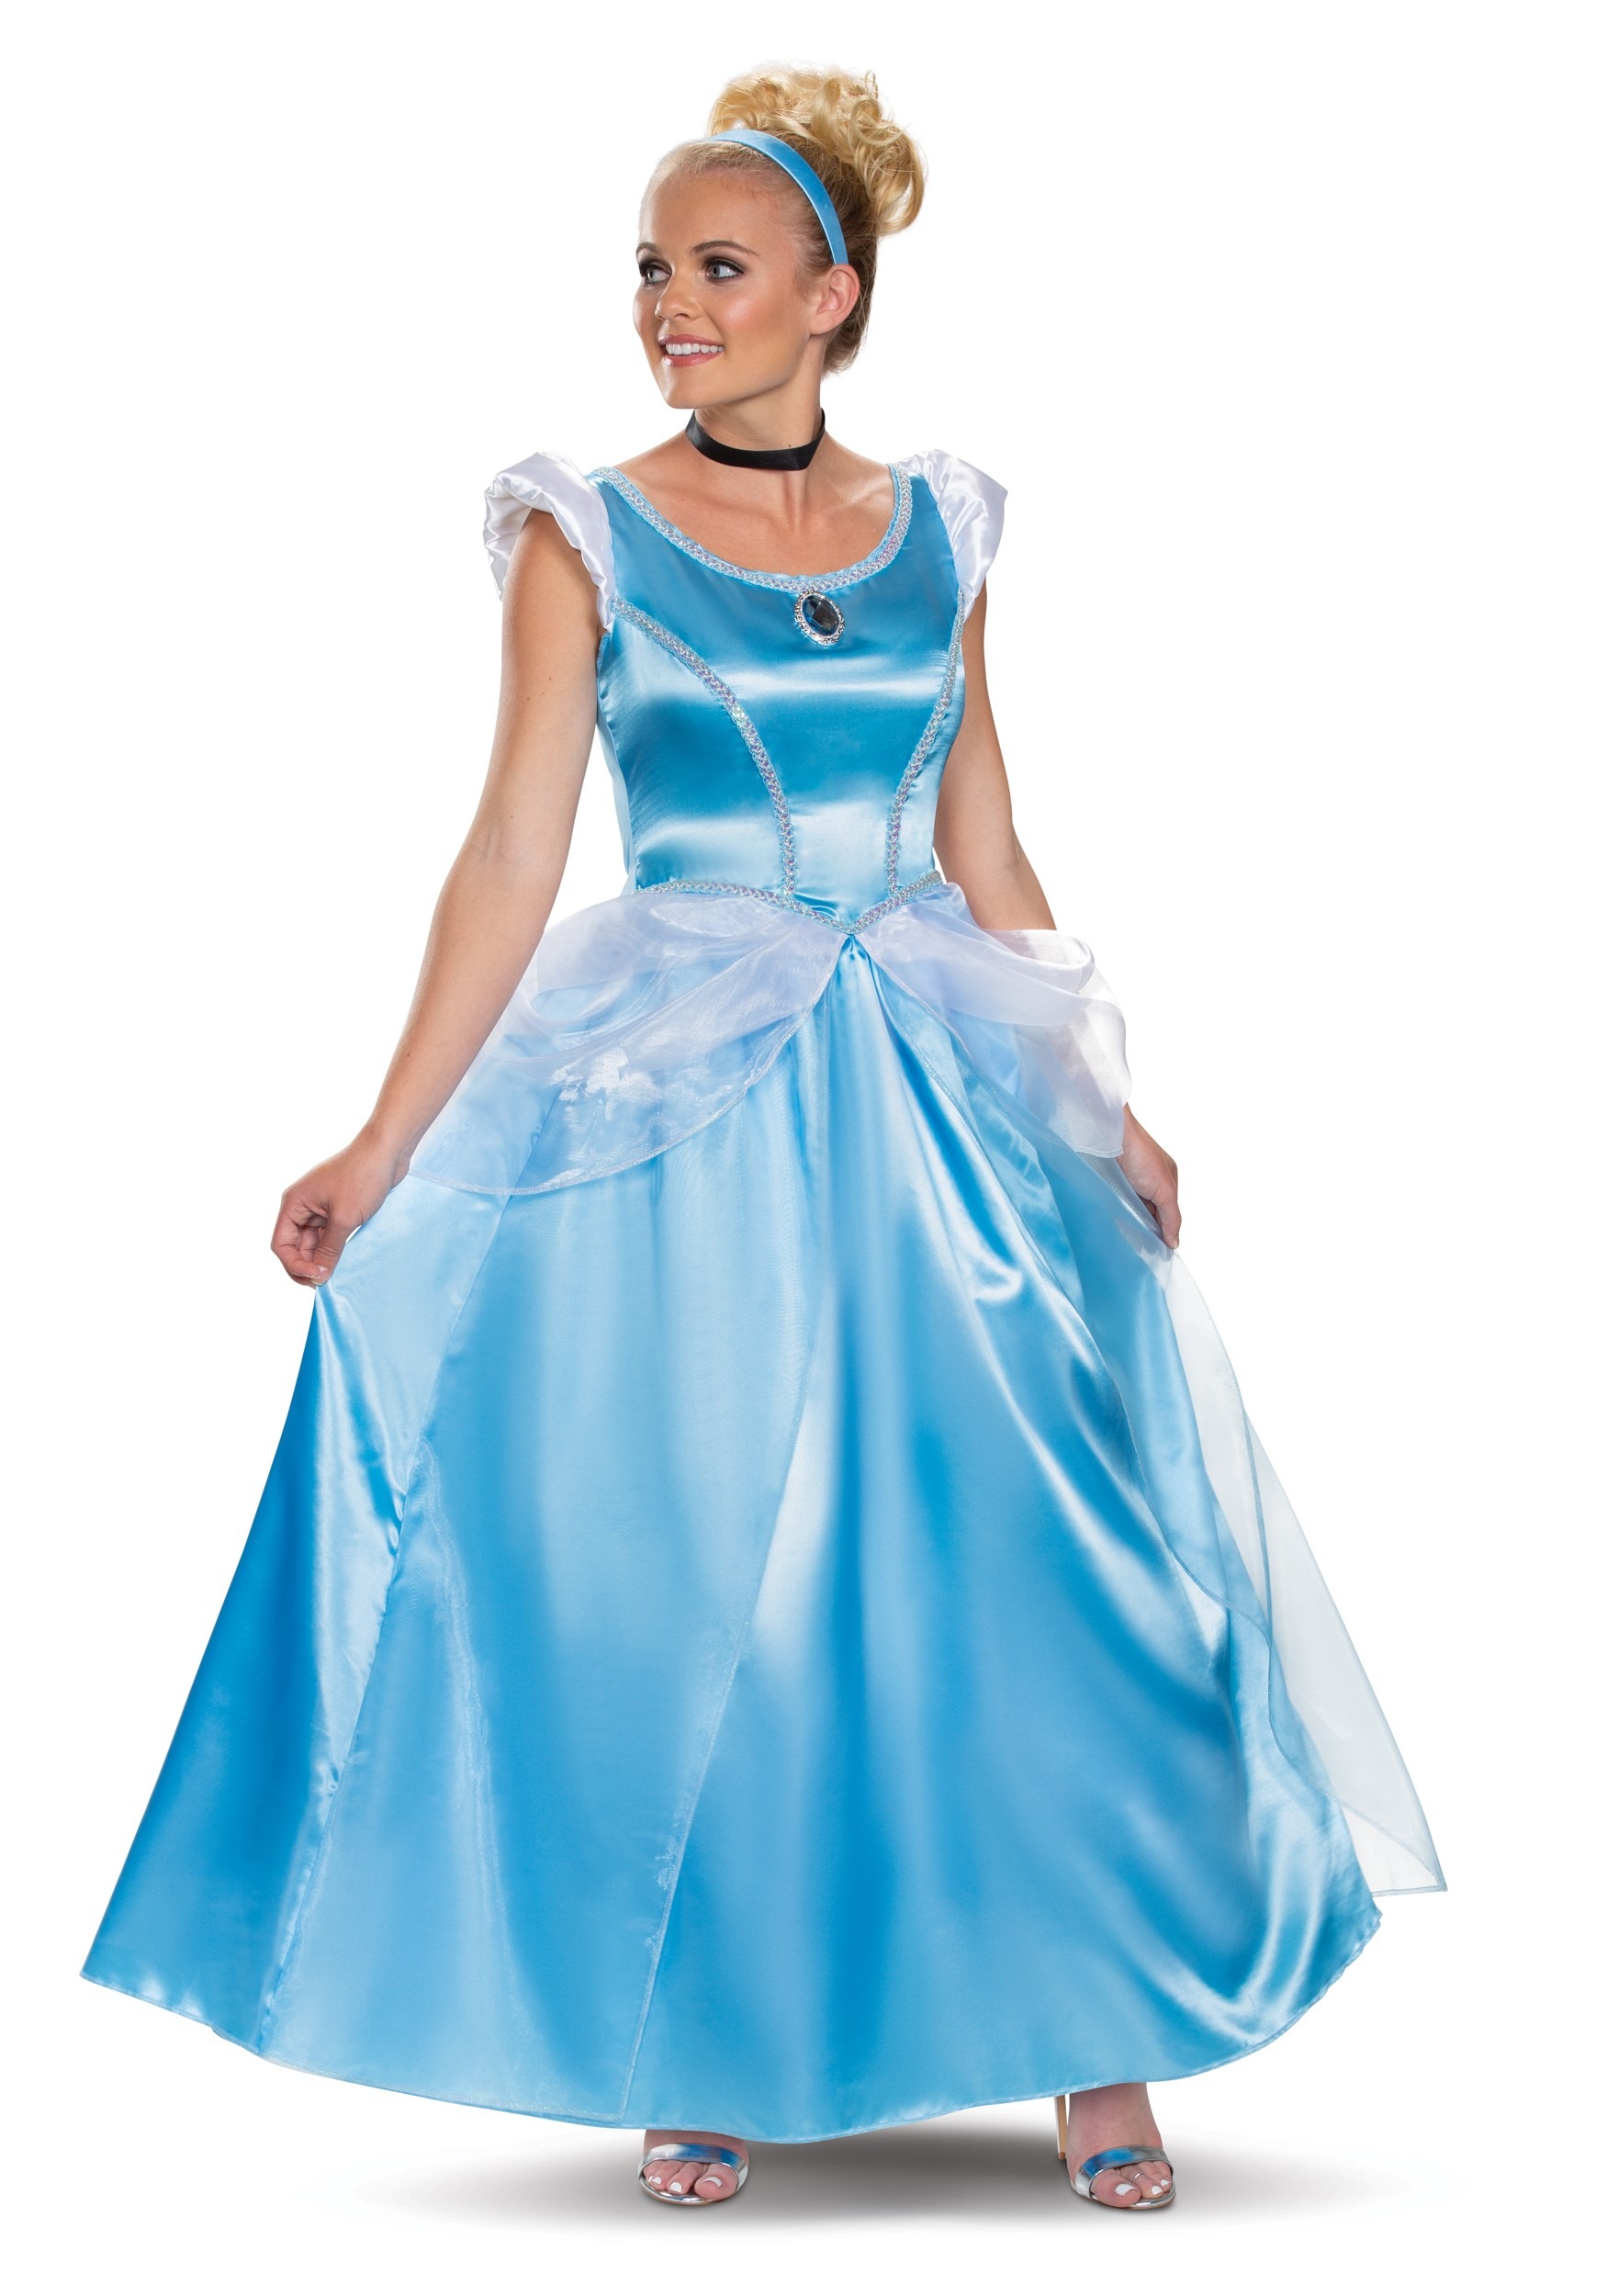 Image of Adult Deluxe Cinderella Costume ID DI103909-S